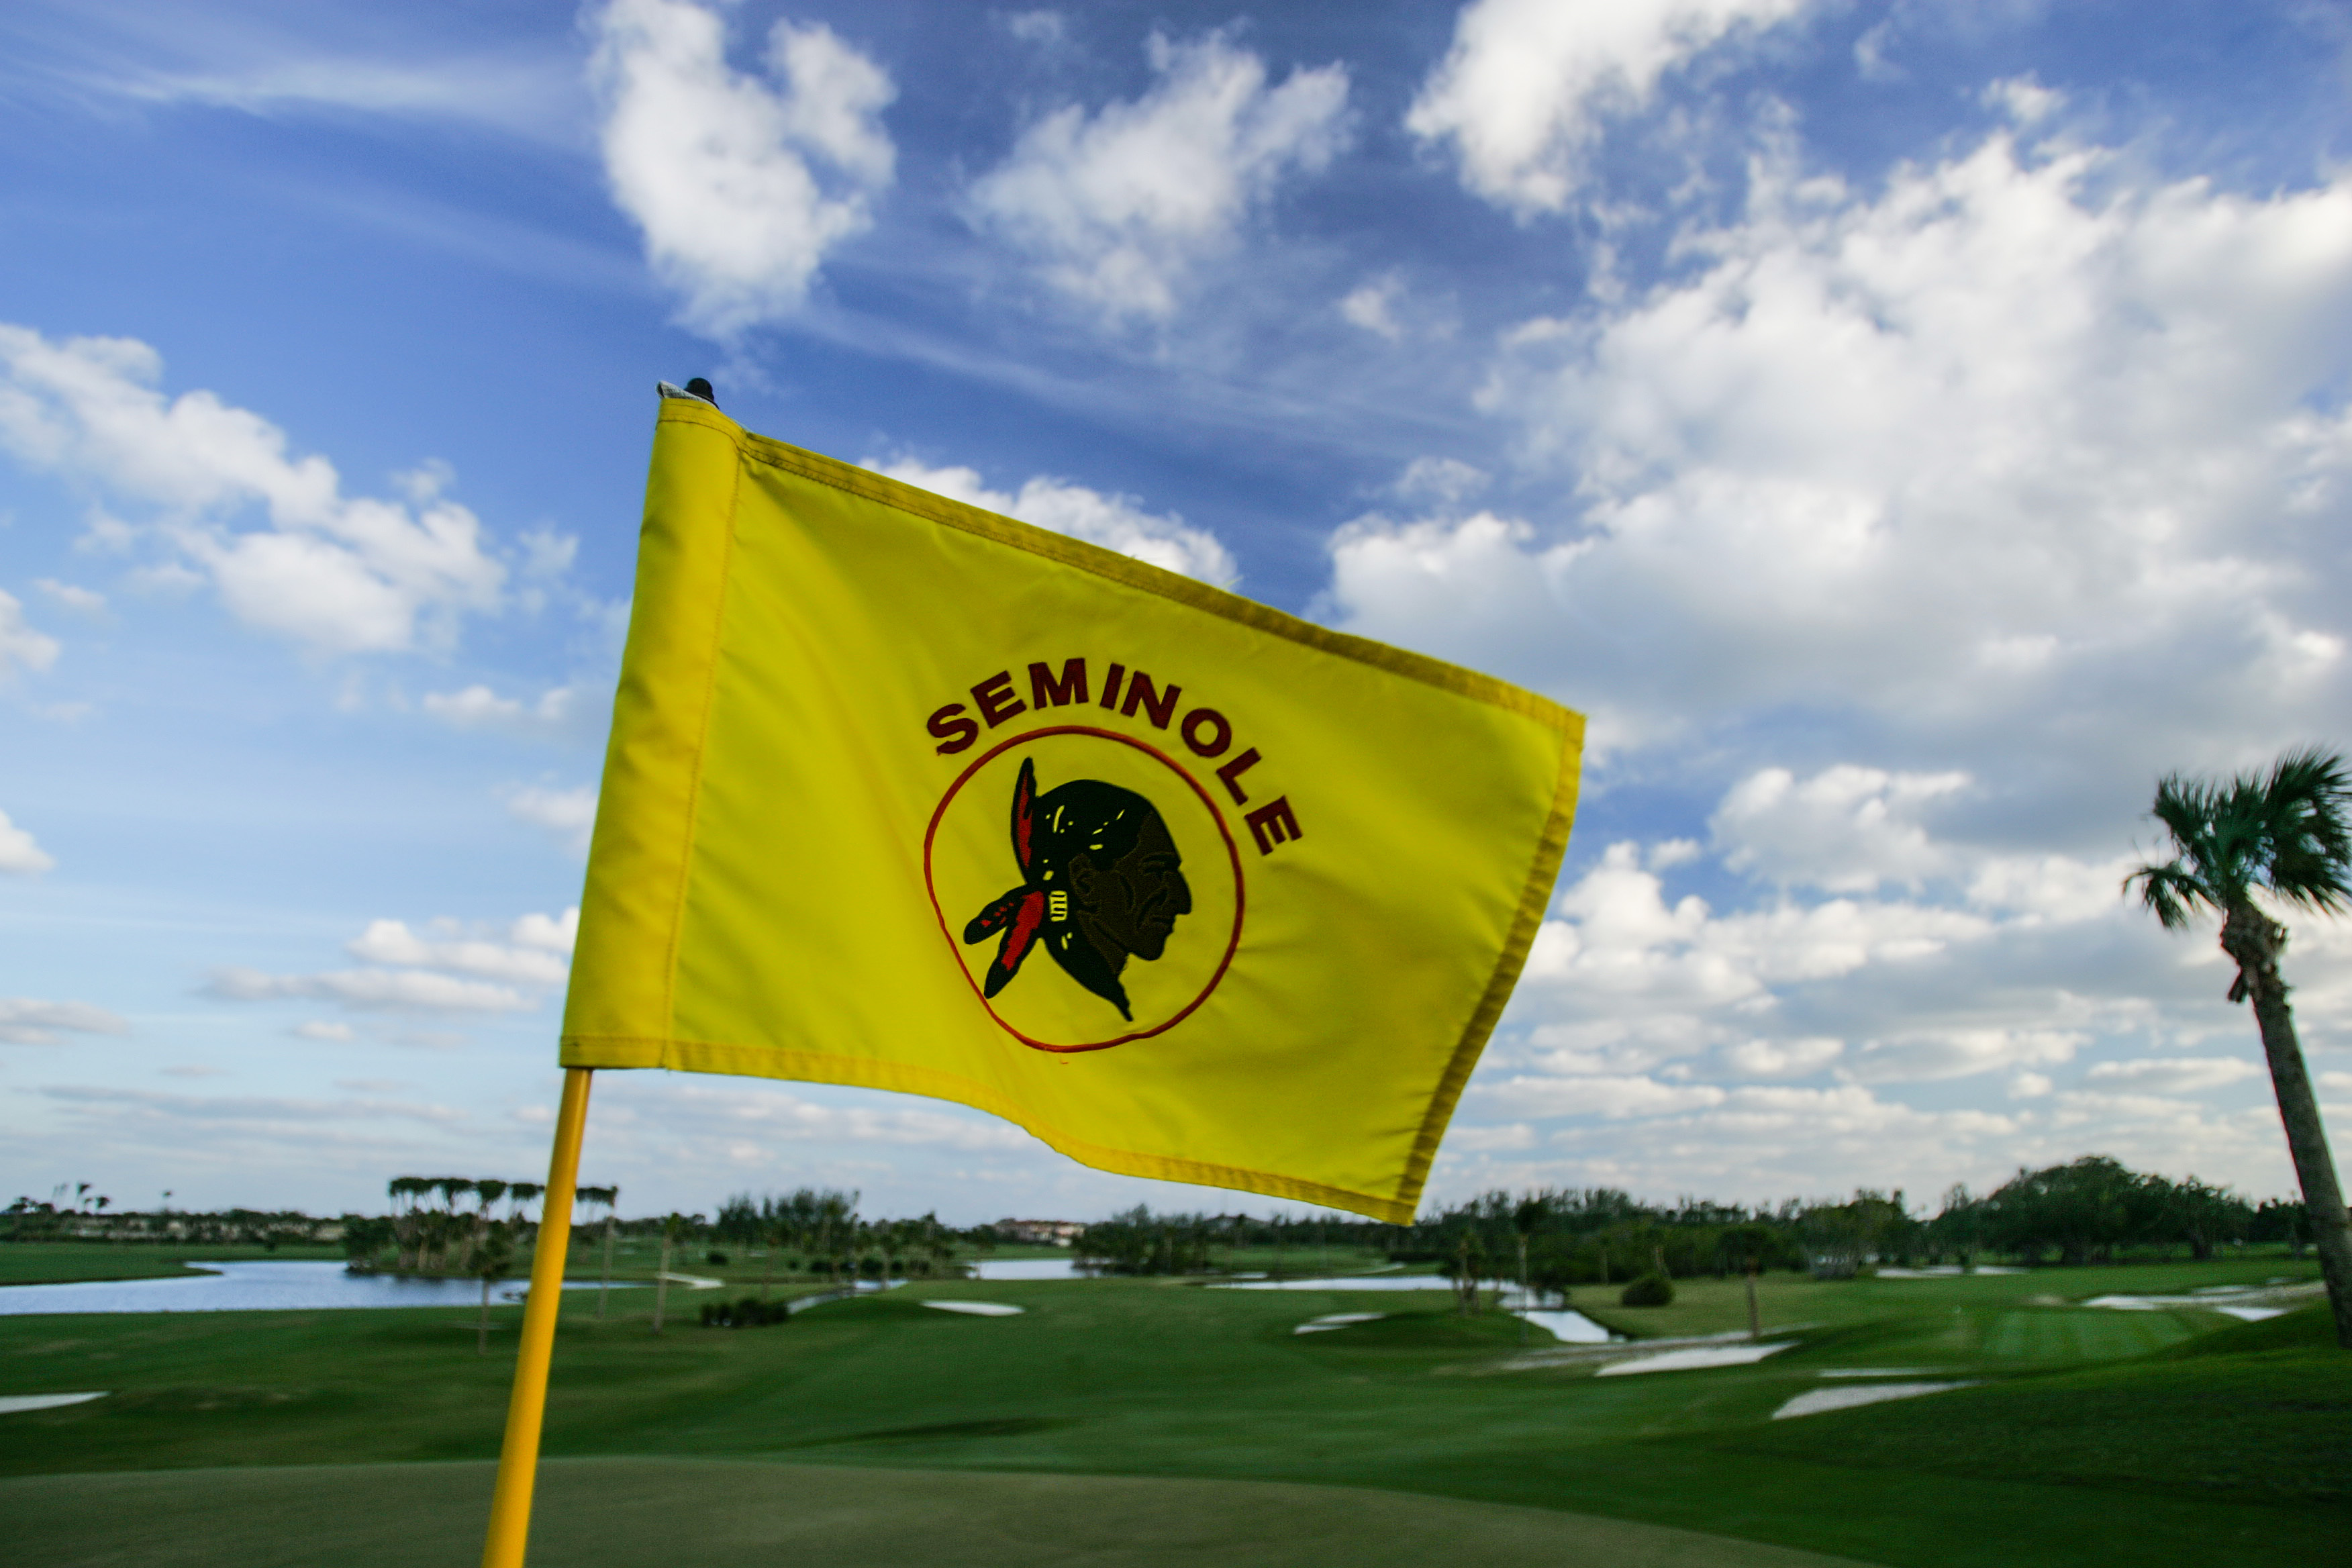 Bob Ford's chapter as Seminole Golf Club's head pro closes